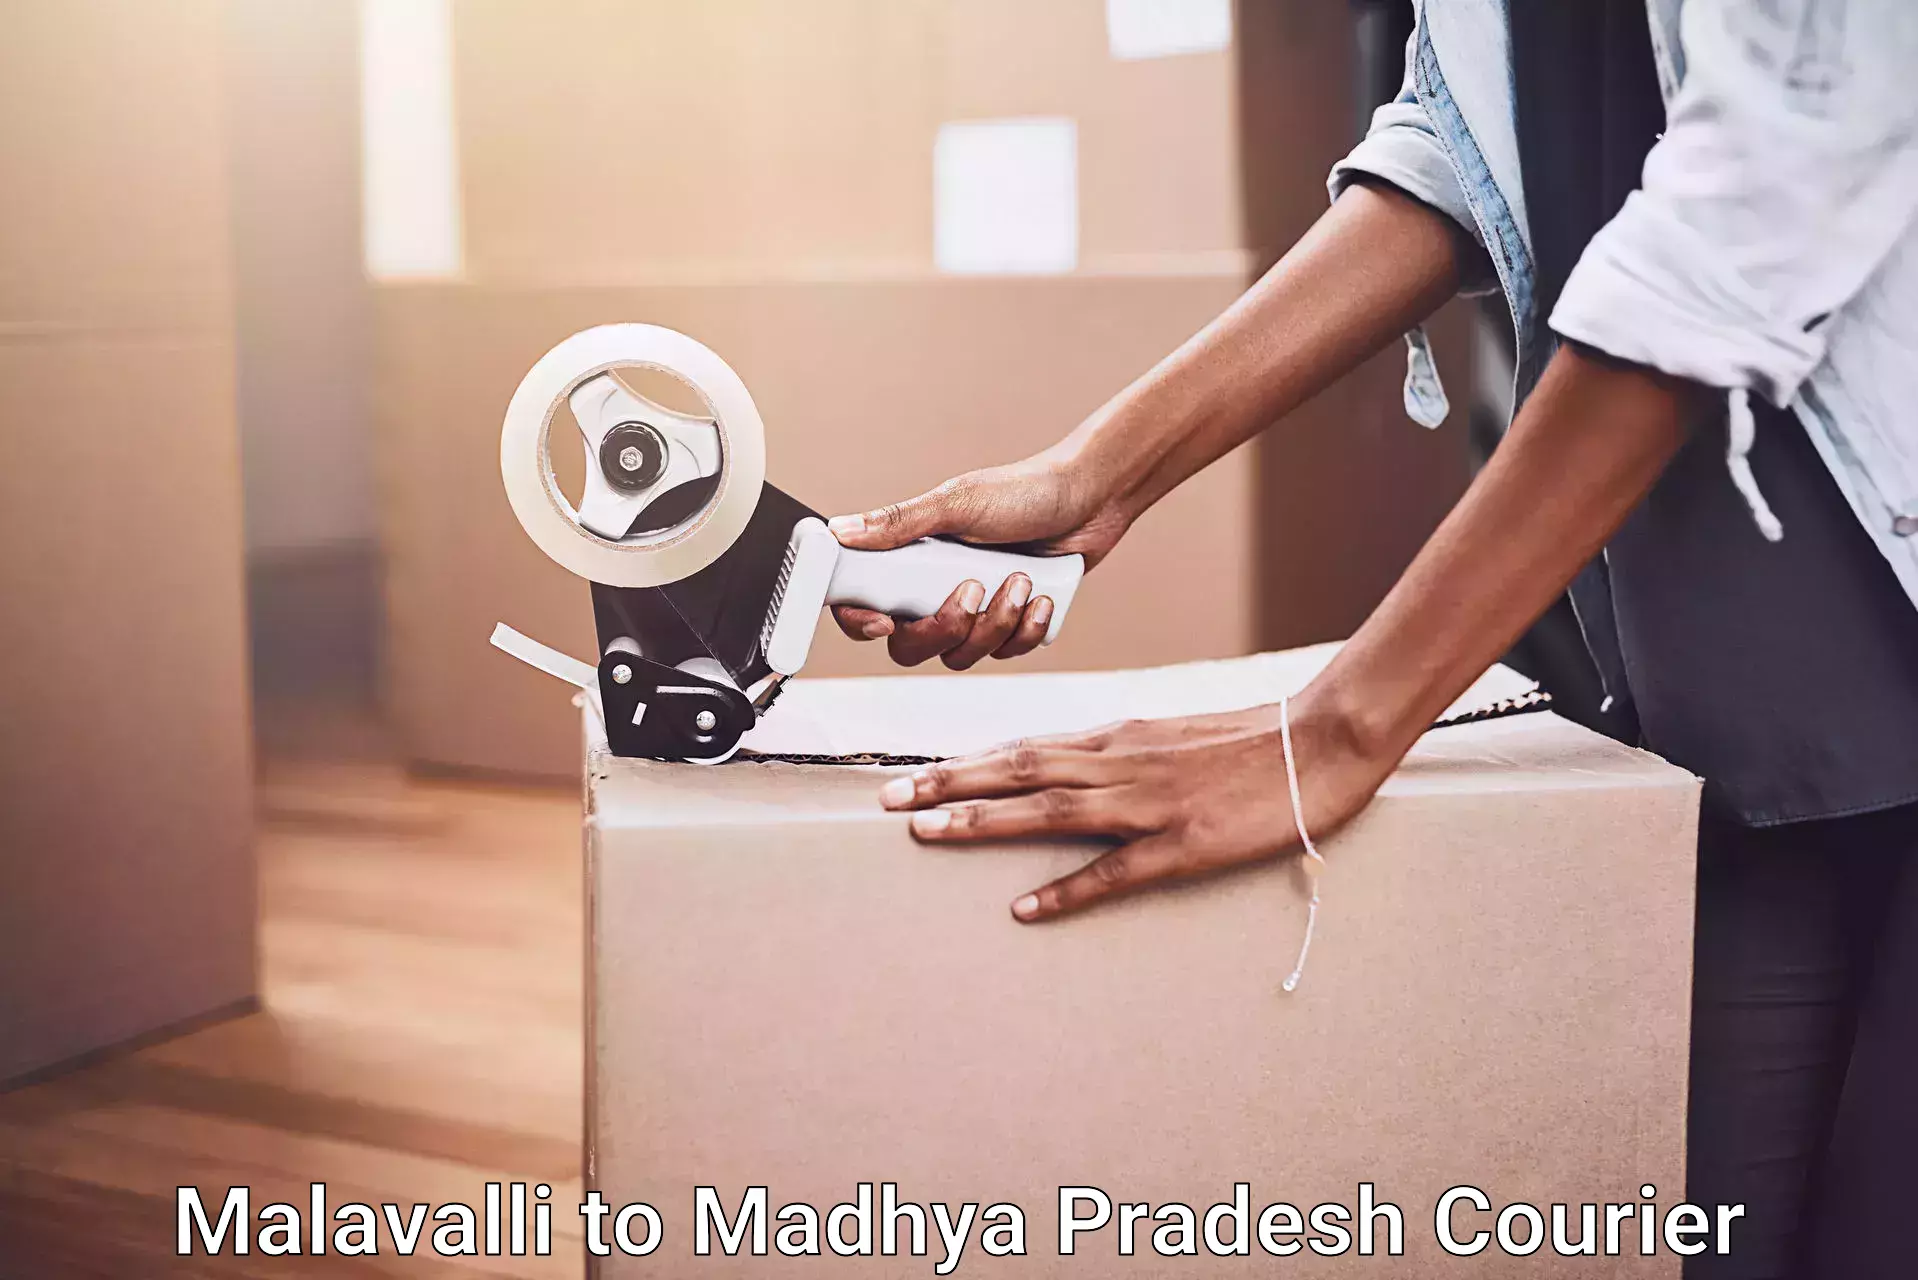 Furniture delivery service Malavalli to Satna